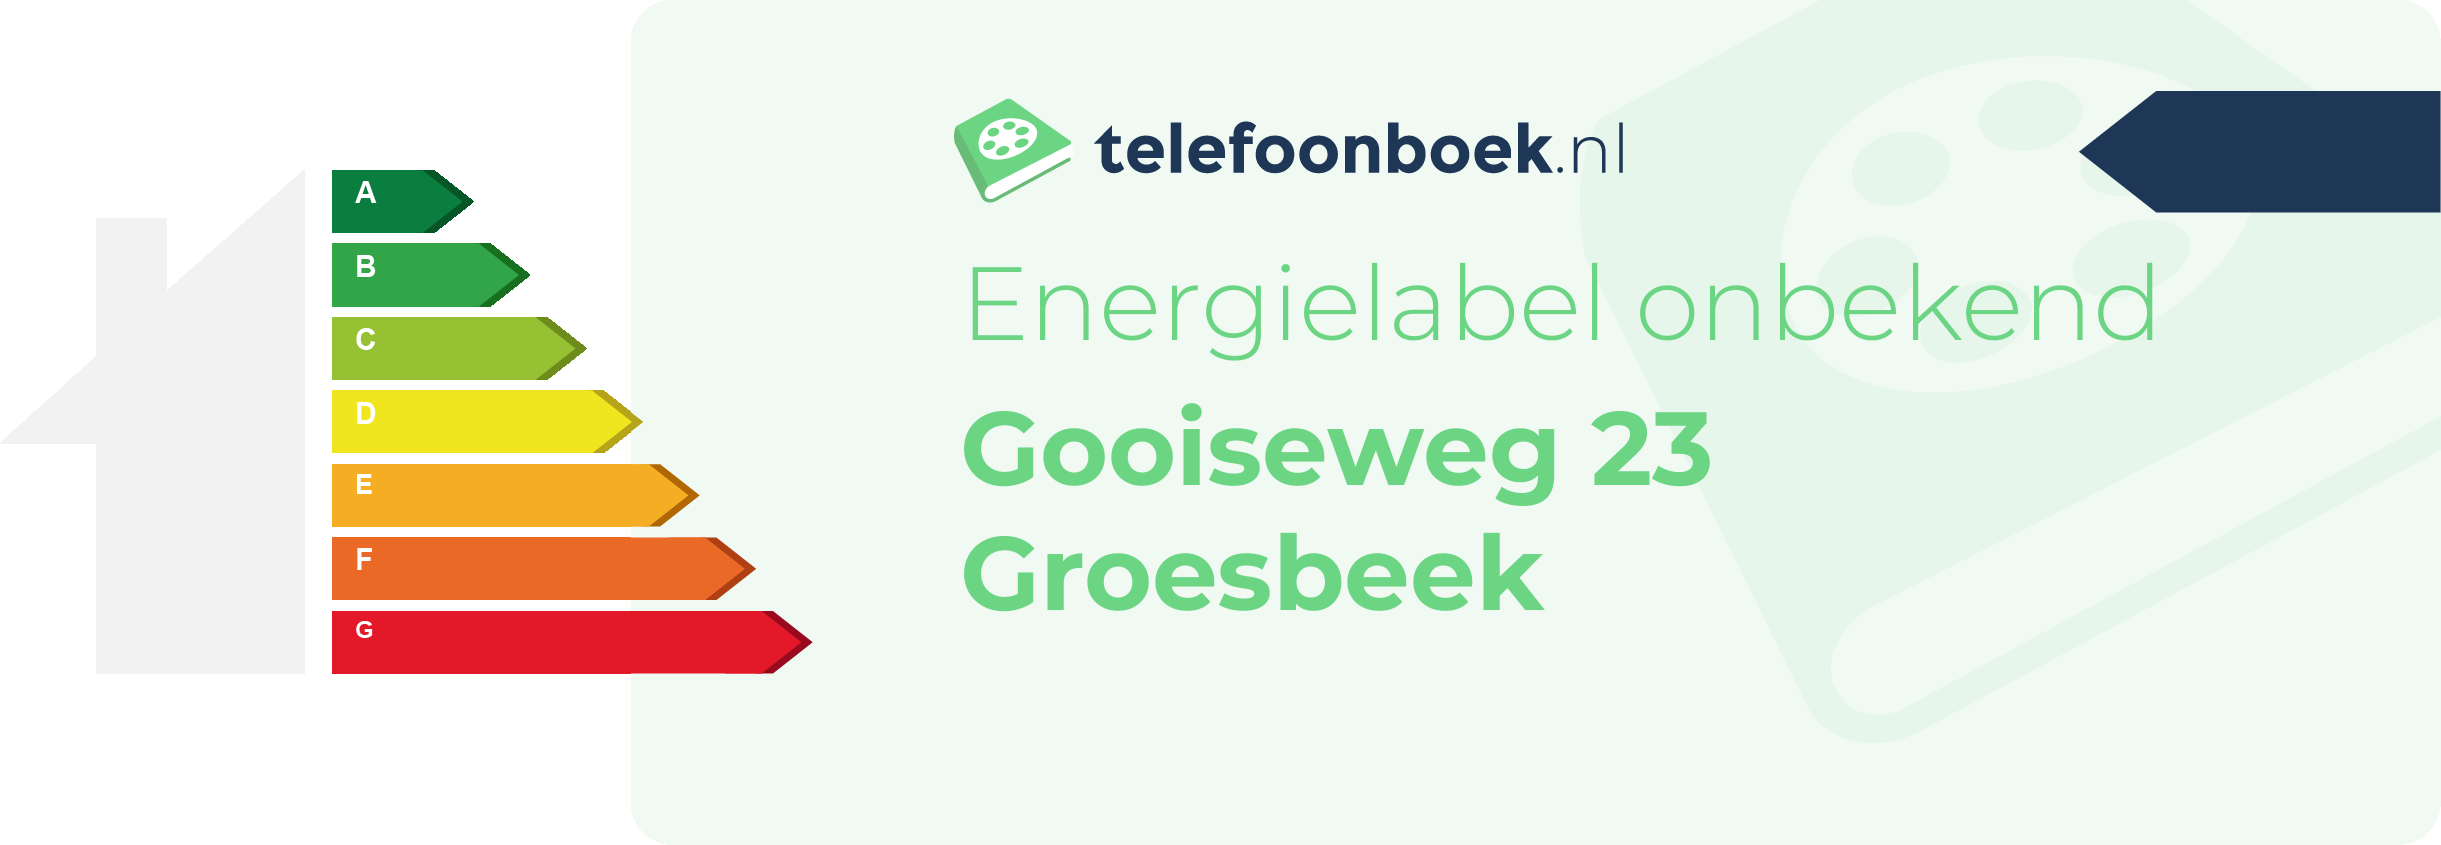 Energielabel Gooiseweg 23 Groesbeek